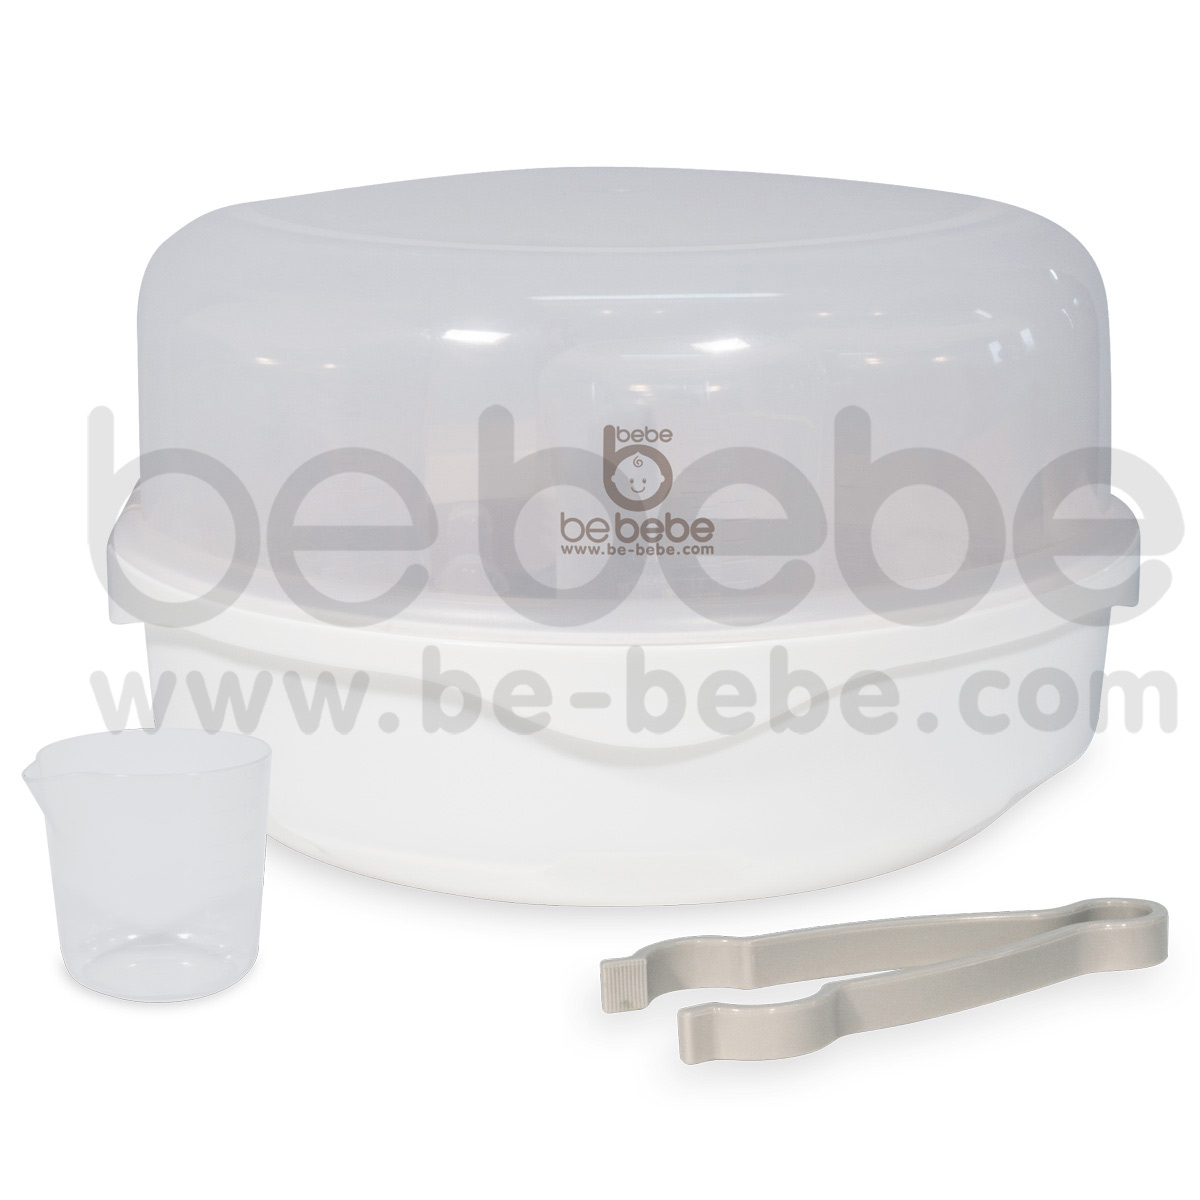 be bebe : Microwave Steam Sterilizer /BEBE-001-701